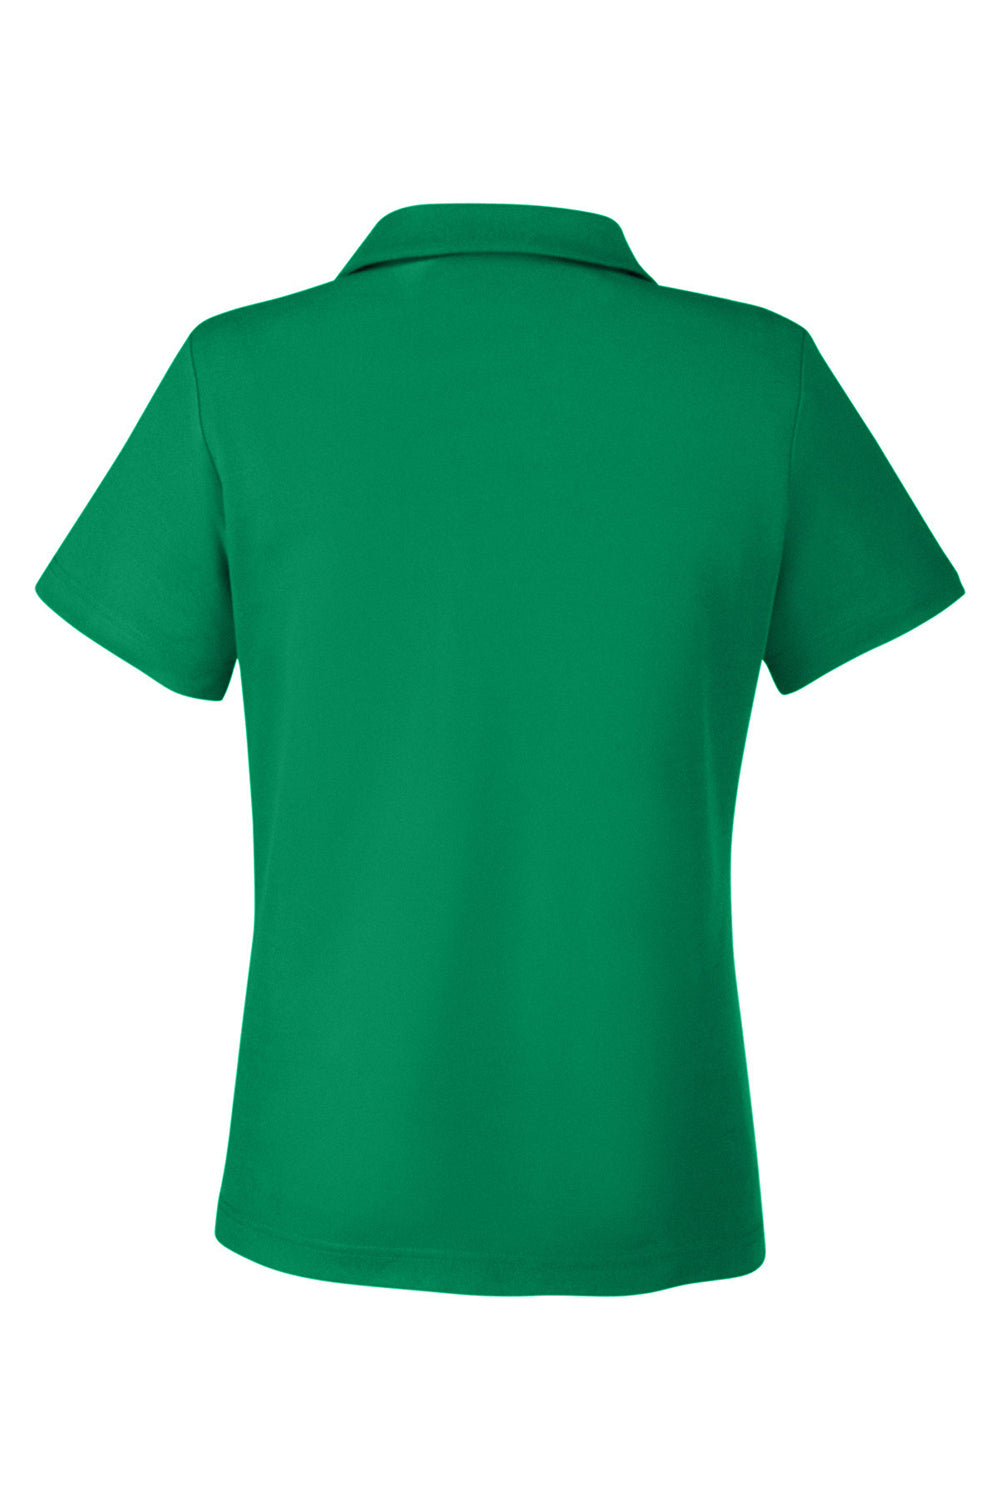 Core 365 CE112W Womens Fusion ChromaSoft Performance Moisture Wicking Pique Short Sleeve Polo Shirt Kelly Green Flat Back